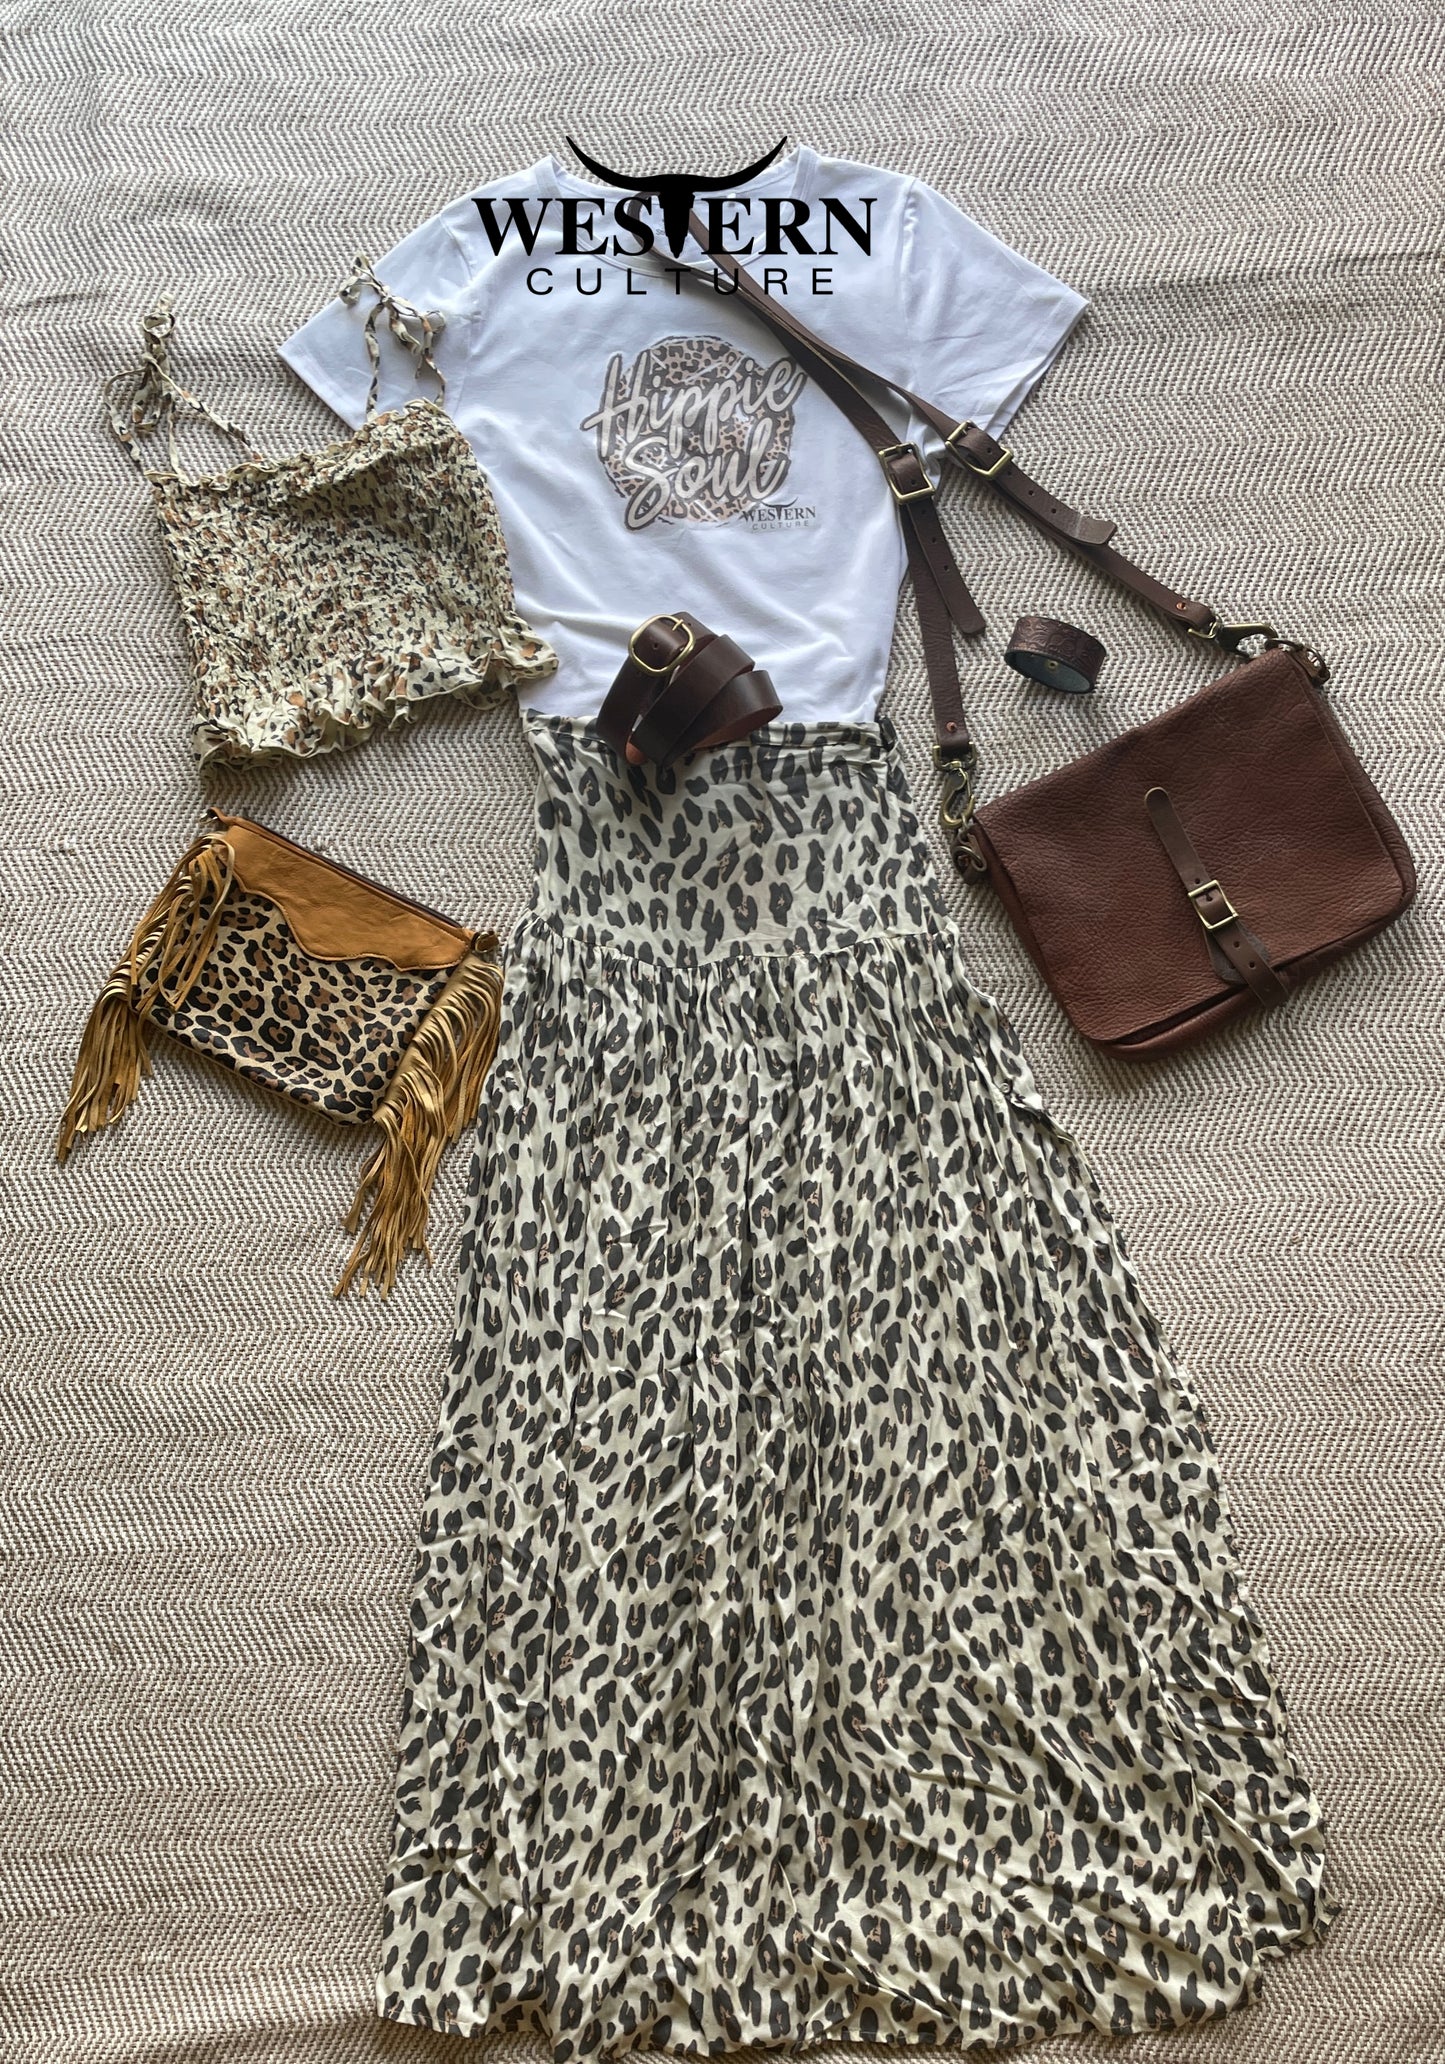 Safari skirt - Leopard print-Western Culture Leather